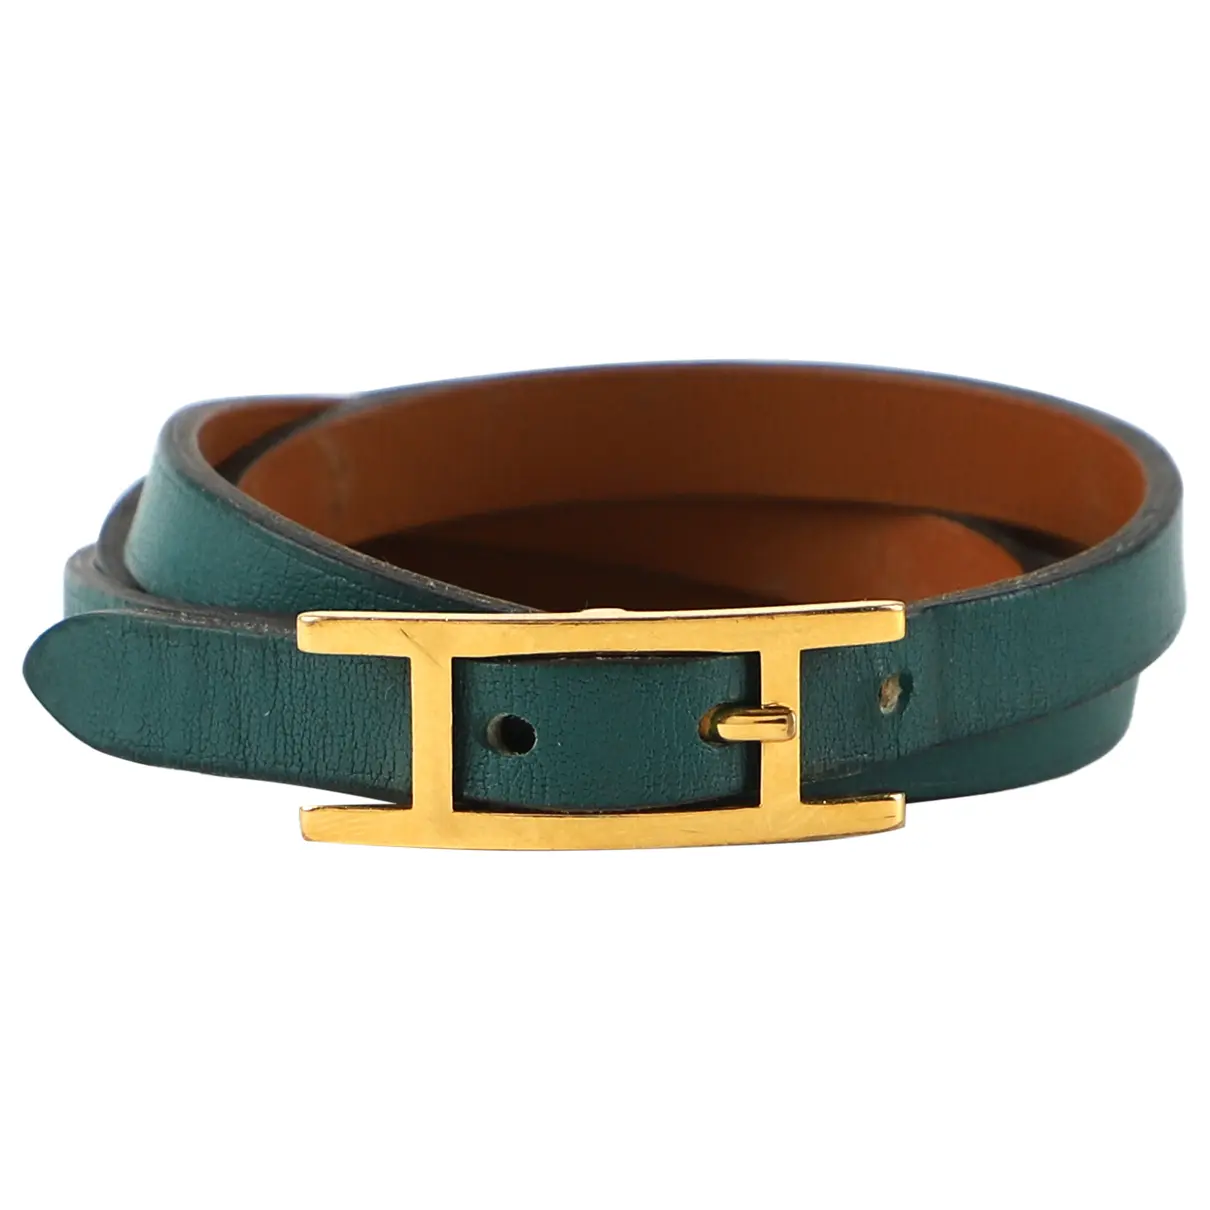 Behapi leather bracelet